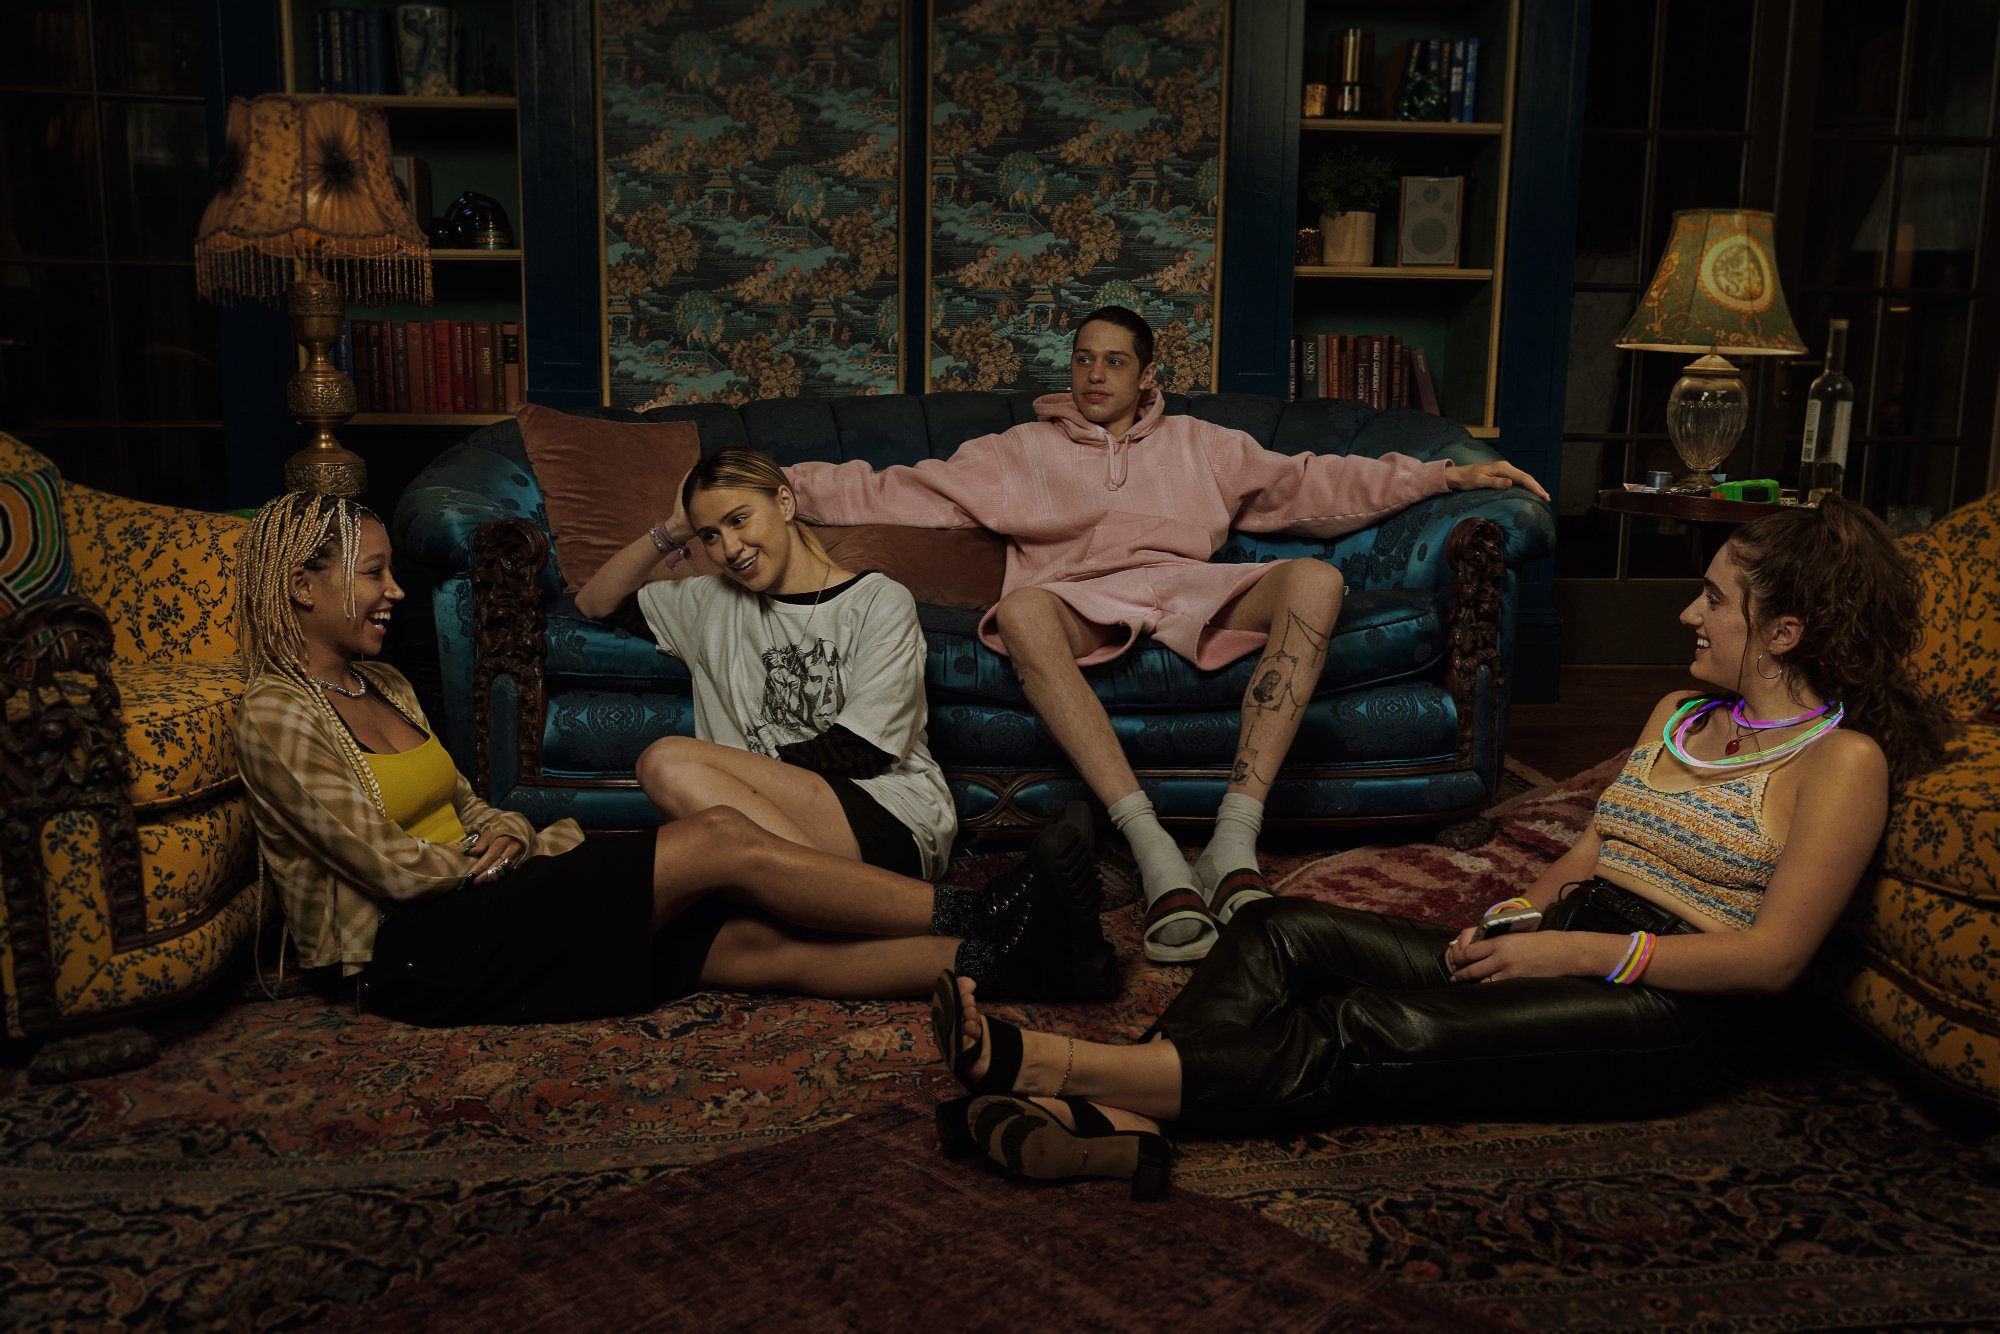 'Bodies Bodies Bodies' game slasher movie Sophie (Amandla Stenberg), Bee (Maria Bakalova), David (Pete Davidson), and Alice (Rachel Sennott) sitting in an extravagant sitting room on couches